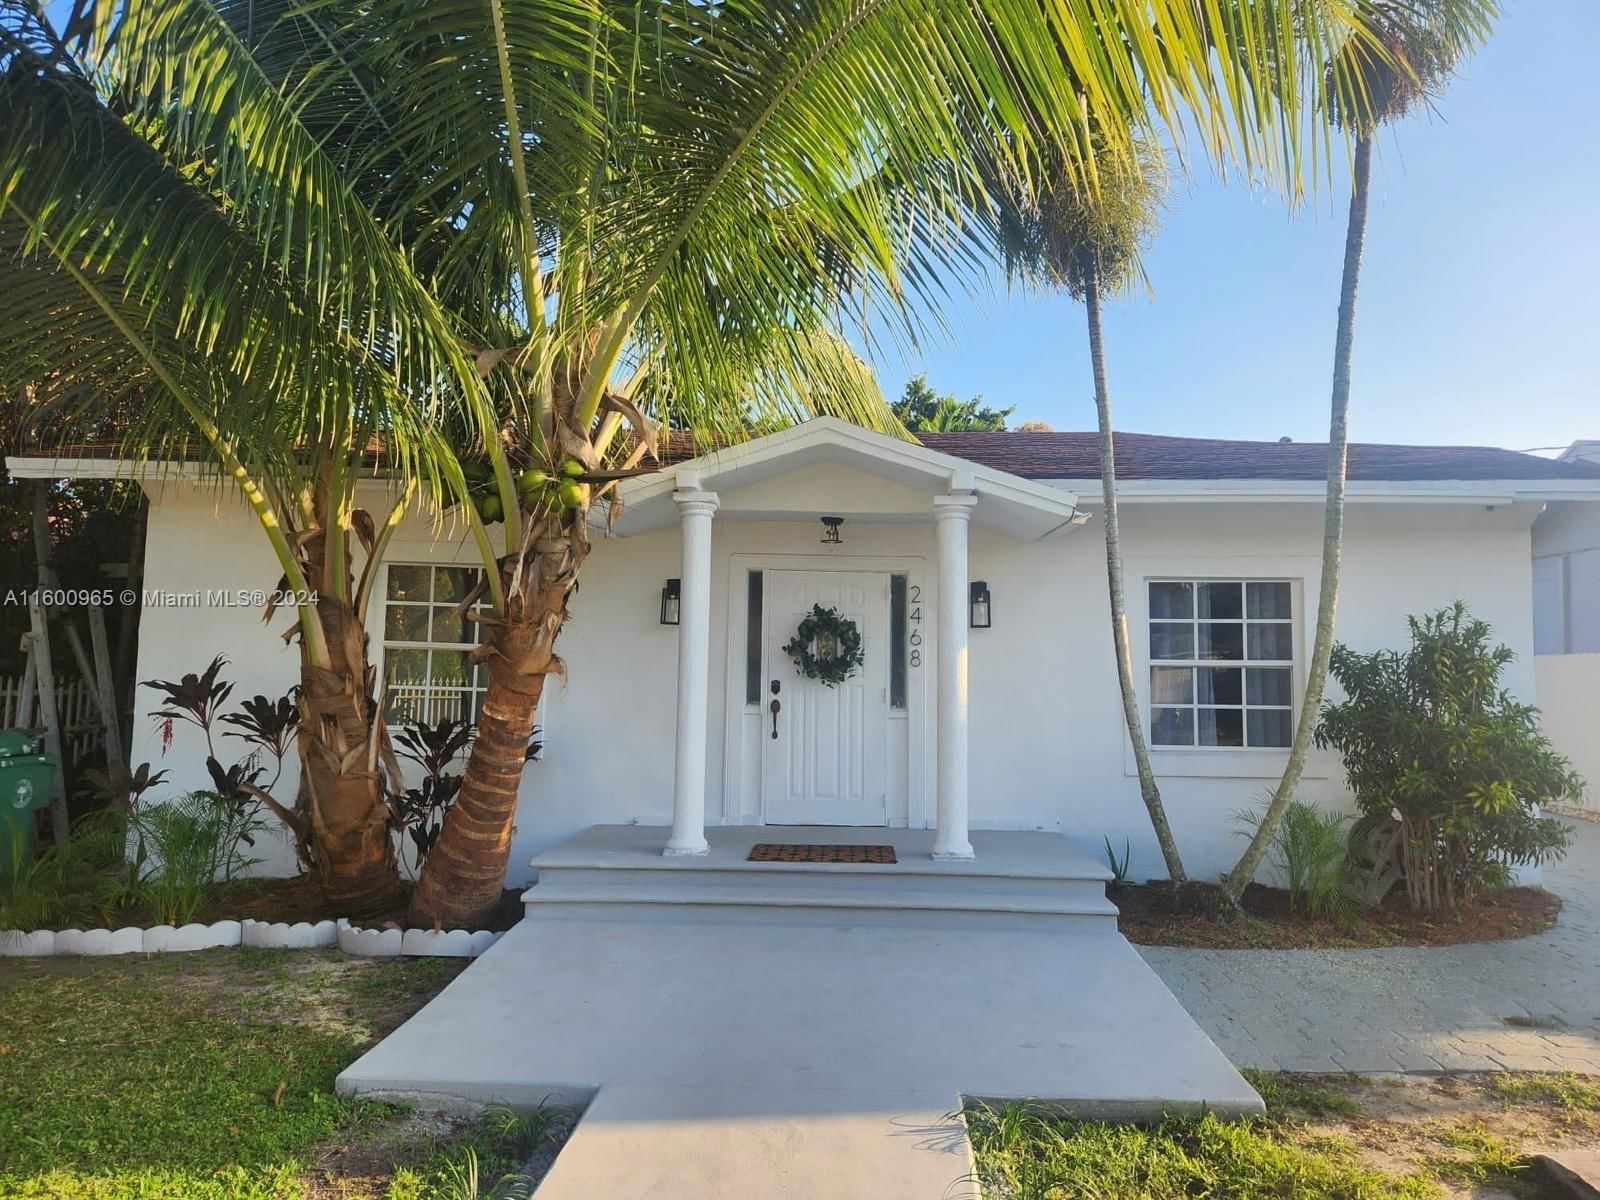 Real estate property located at 2468 14th St, Miami-Dade County, GRAPELAND, Miami, FL